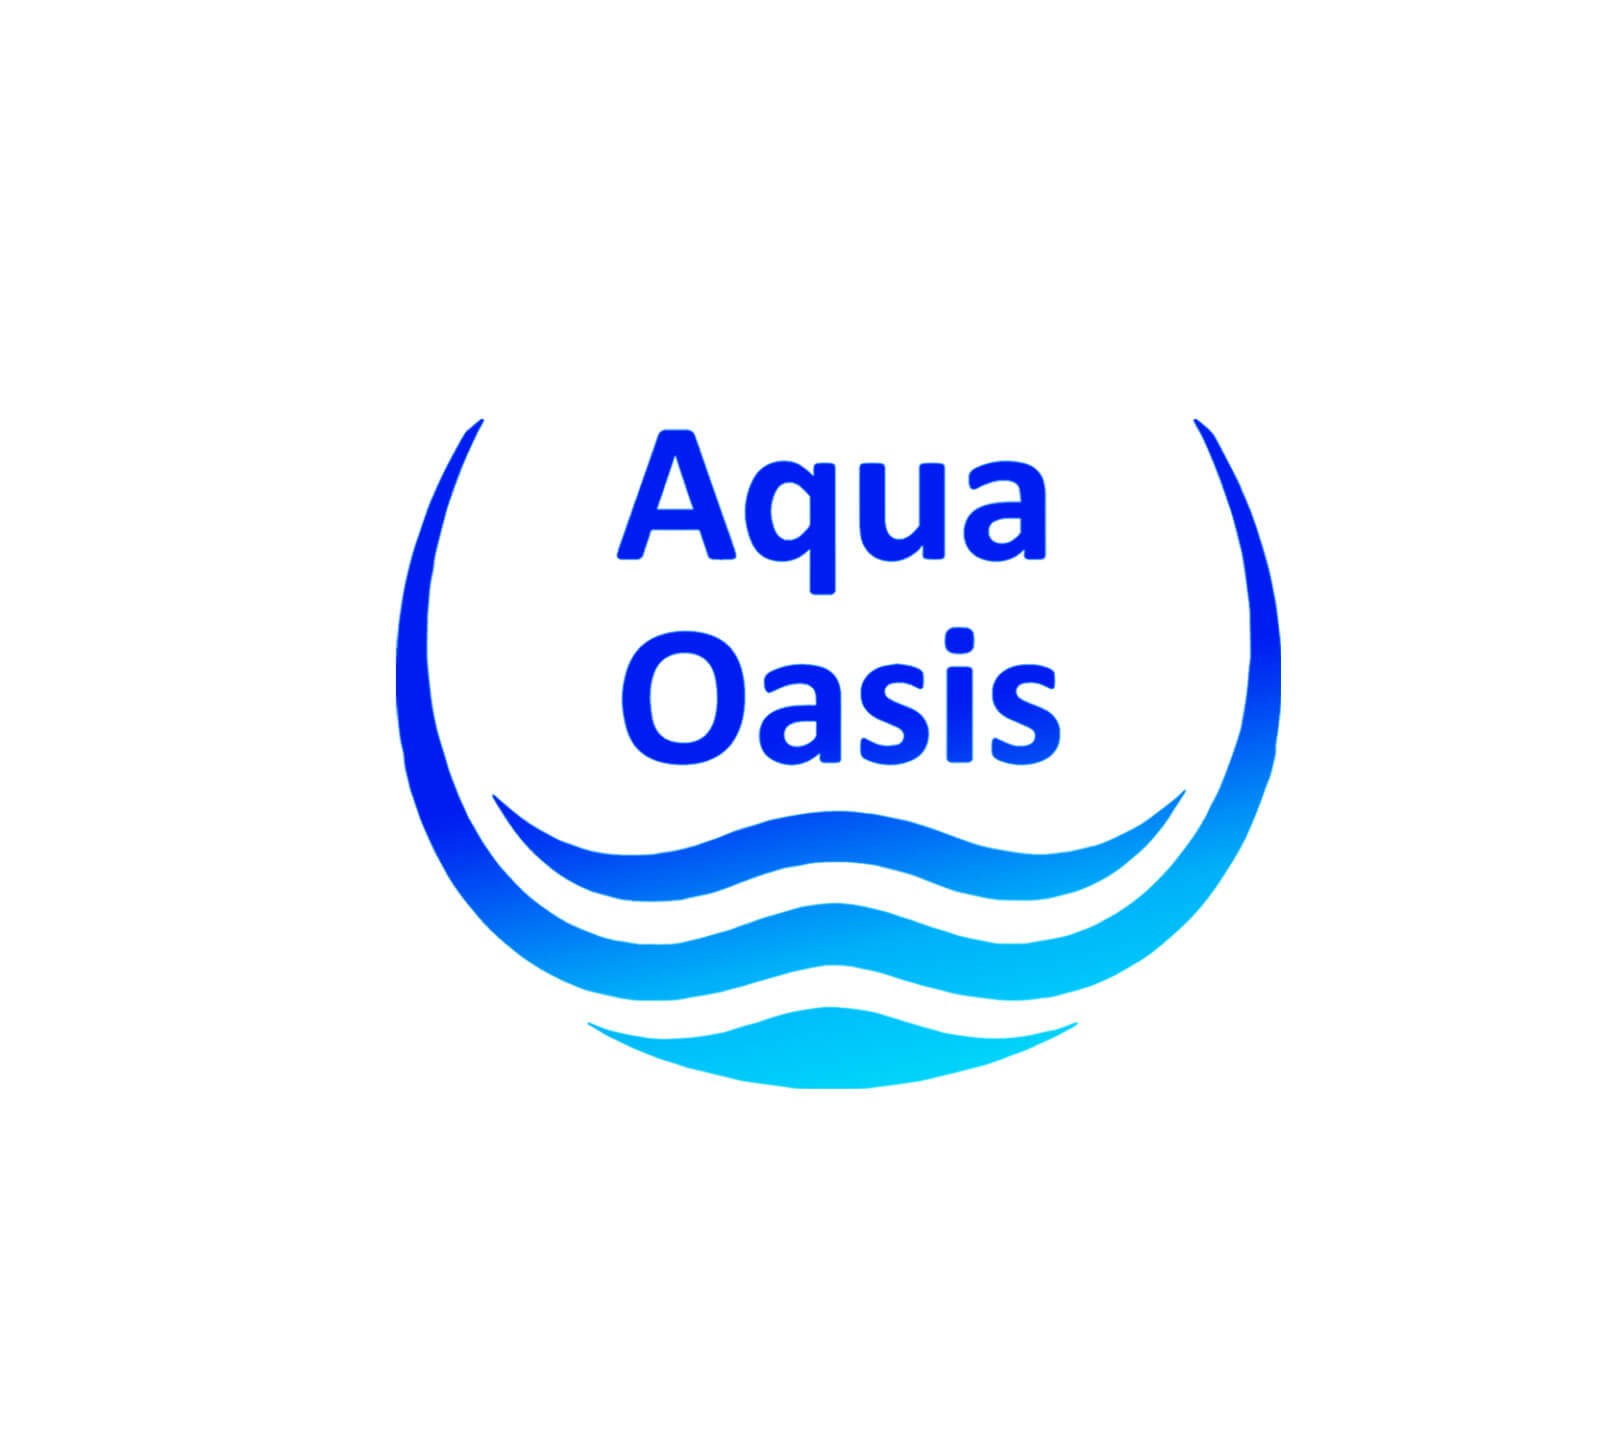 Aqua oasis